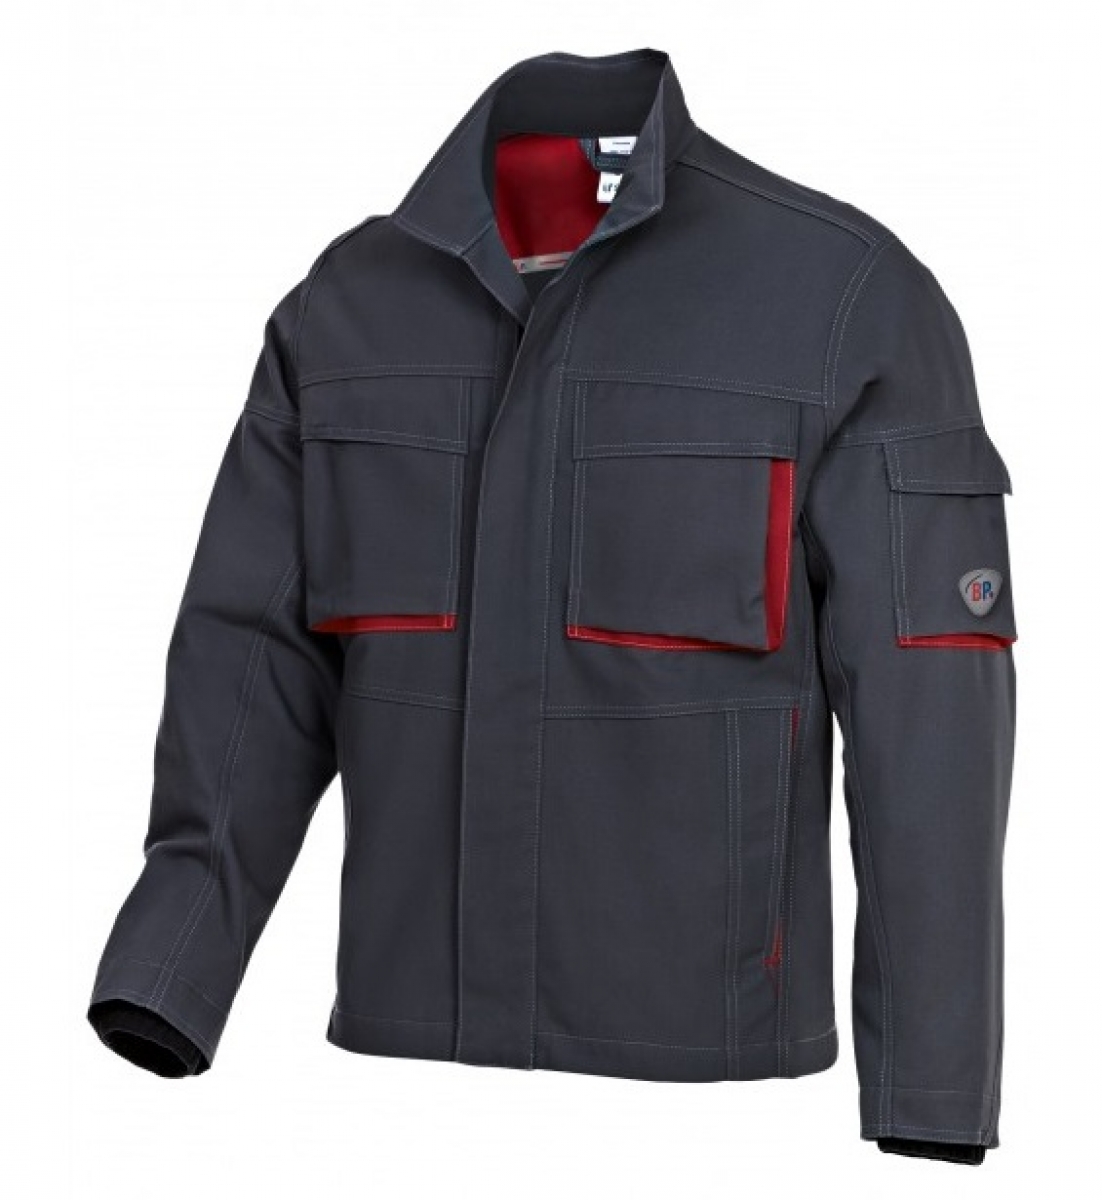 BP-Workwear, Arbeitsjacke, ca. 305g/m, anthrazit/rot